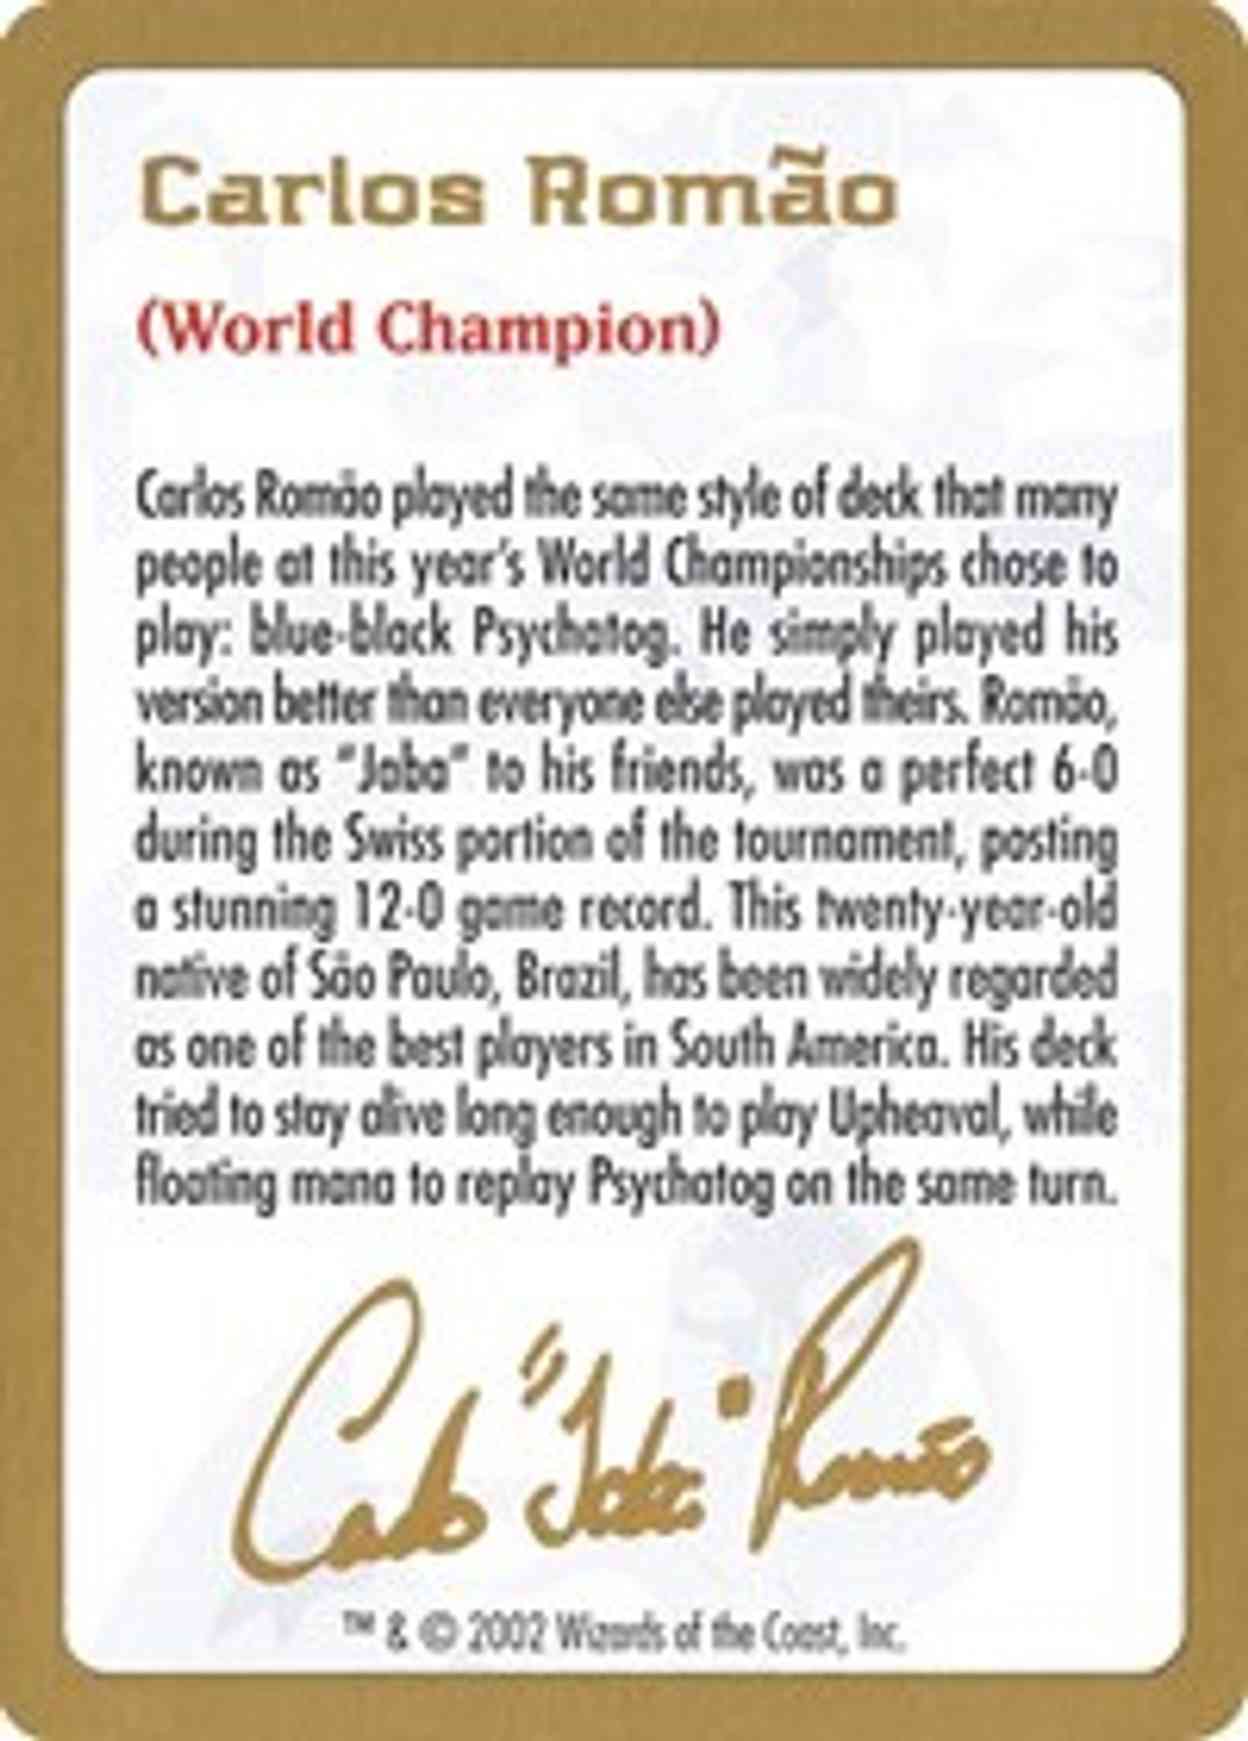 2002 Carlos Romao Biography Card magic card front